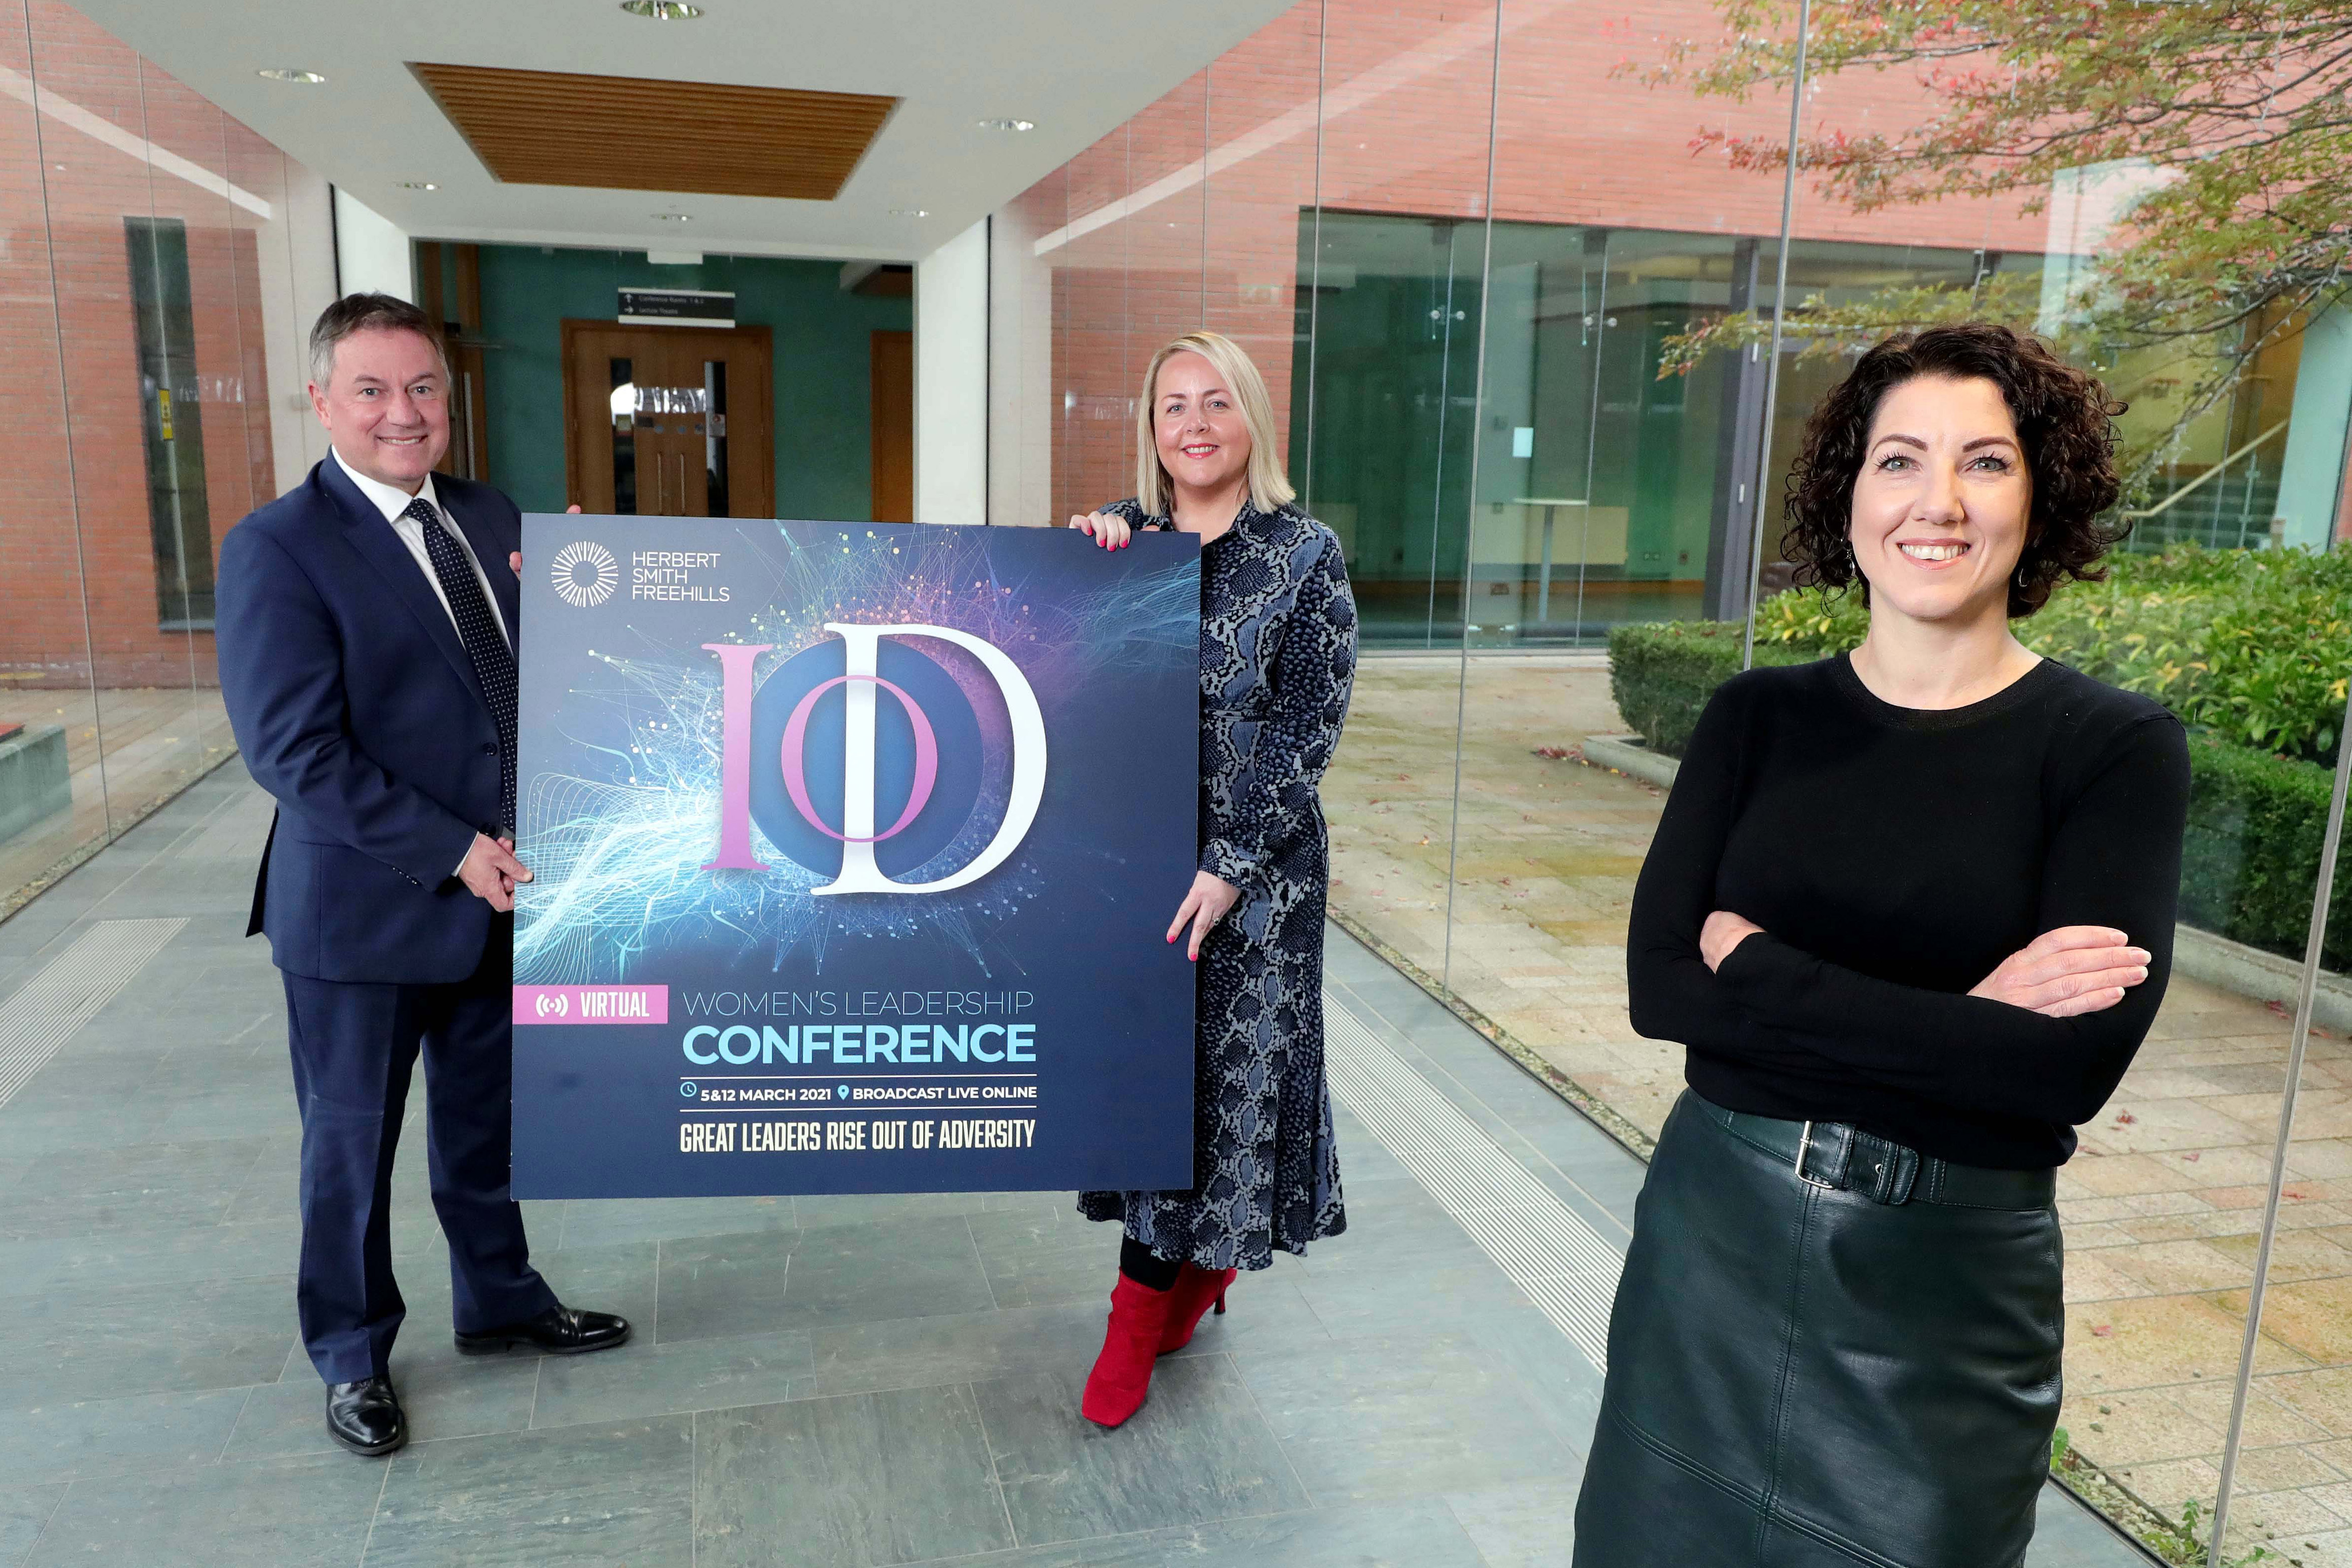 IoD Women's Leadership Conference Launch with Gordon Milligan, Kirsty McManus and sponsor representative Lisa McLaughlin